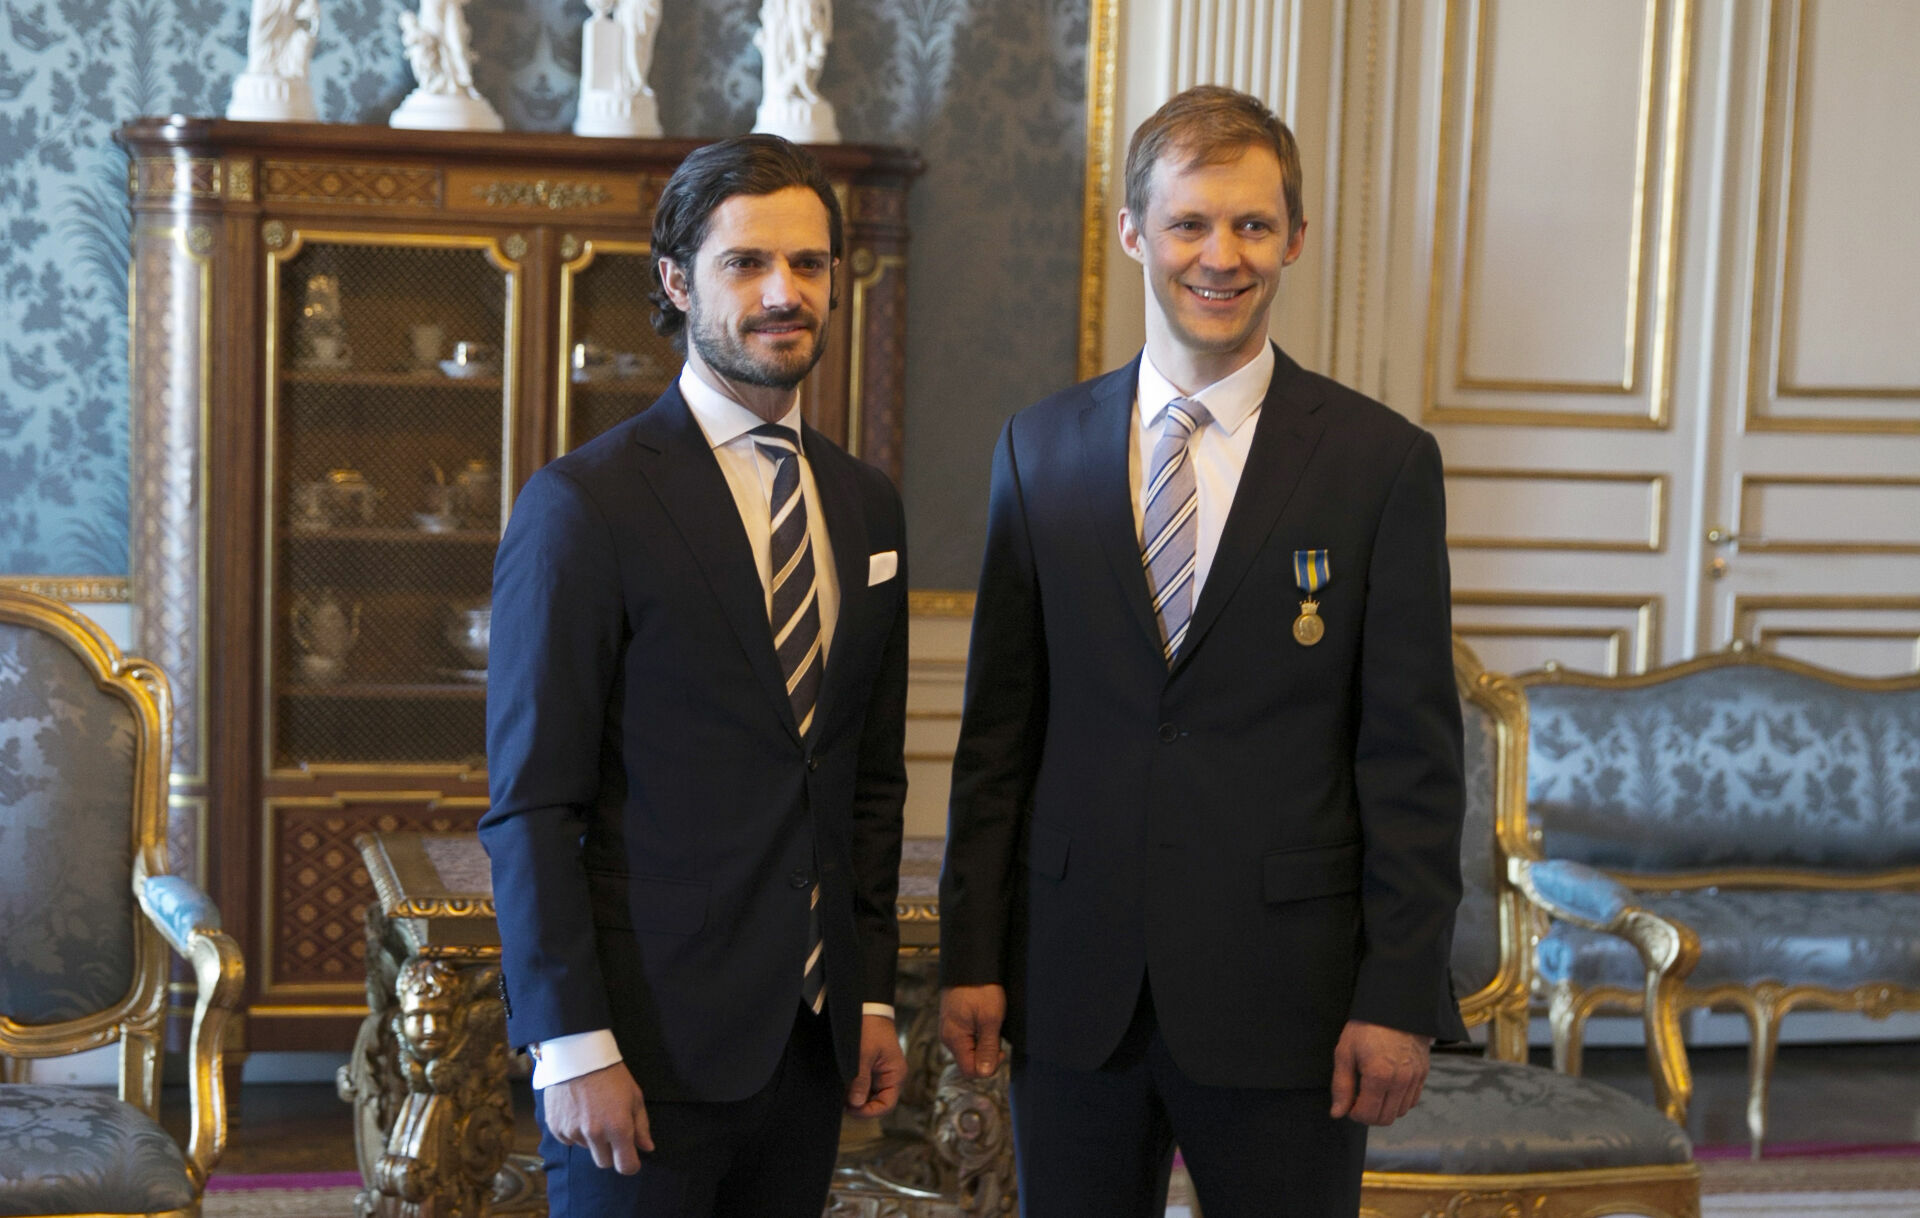 Prince of Sweden honors Mattias Ekström